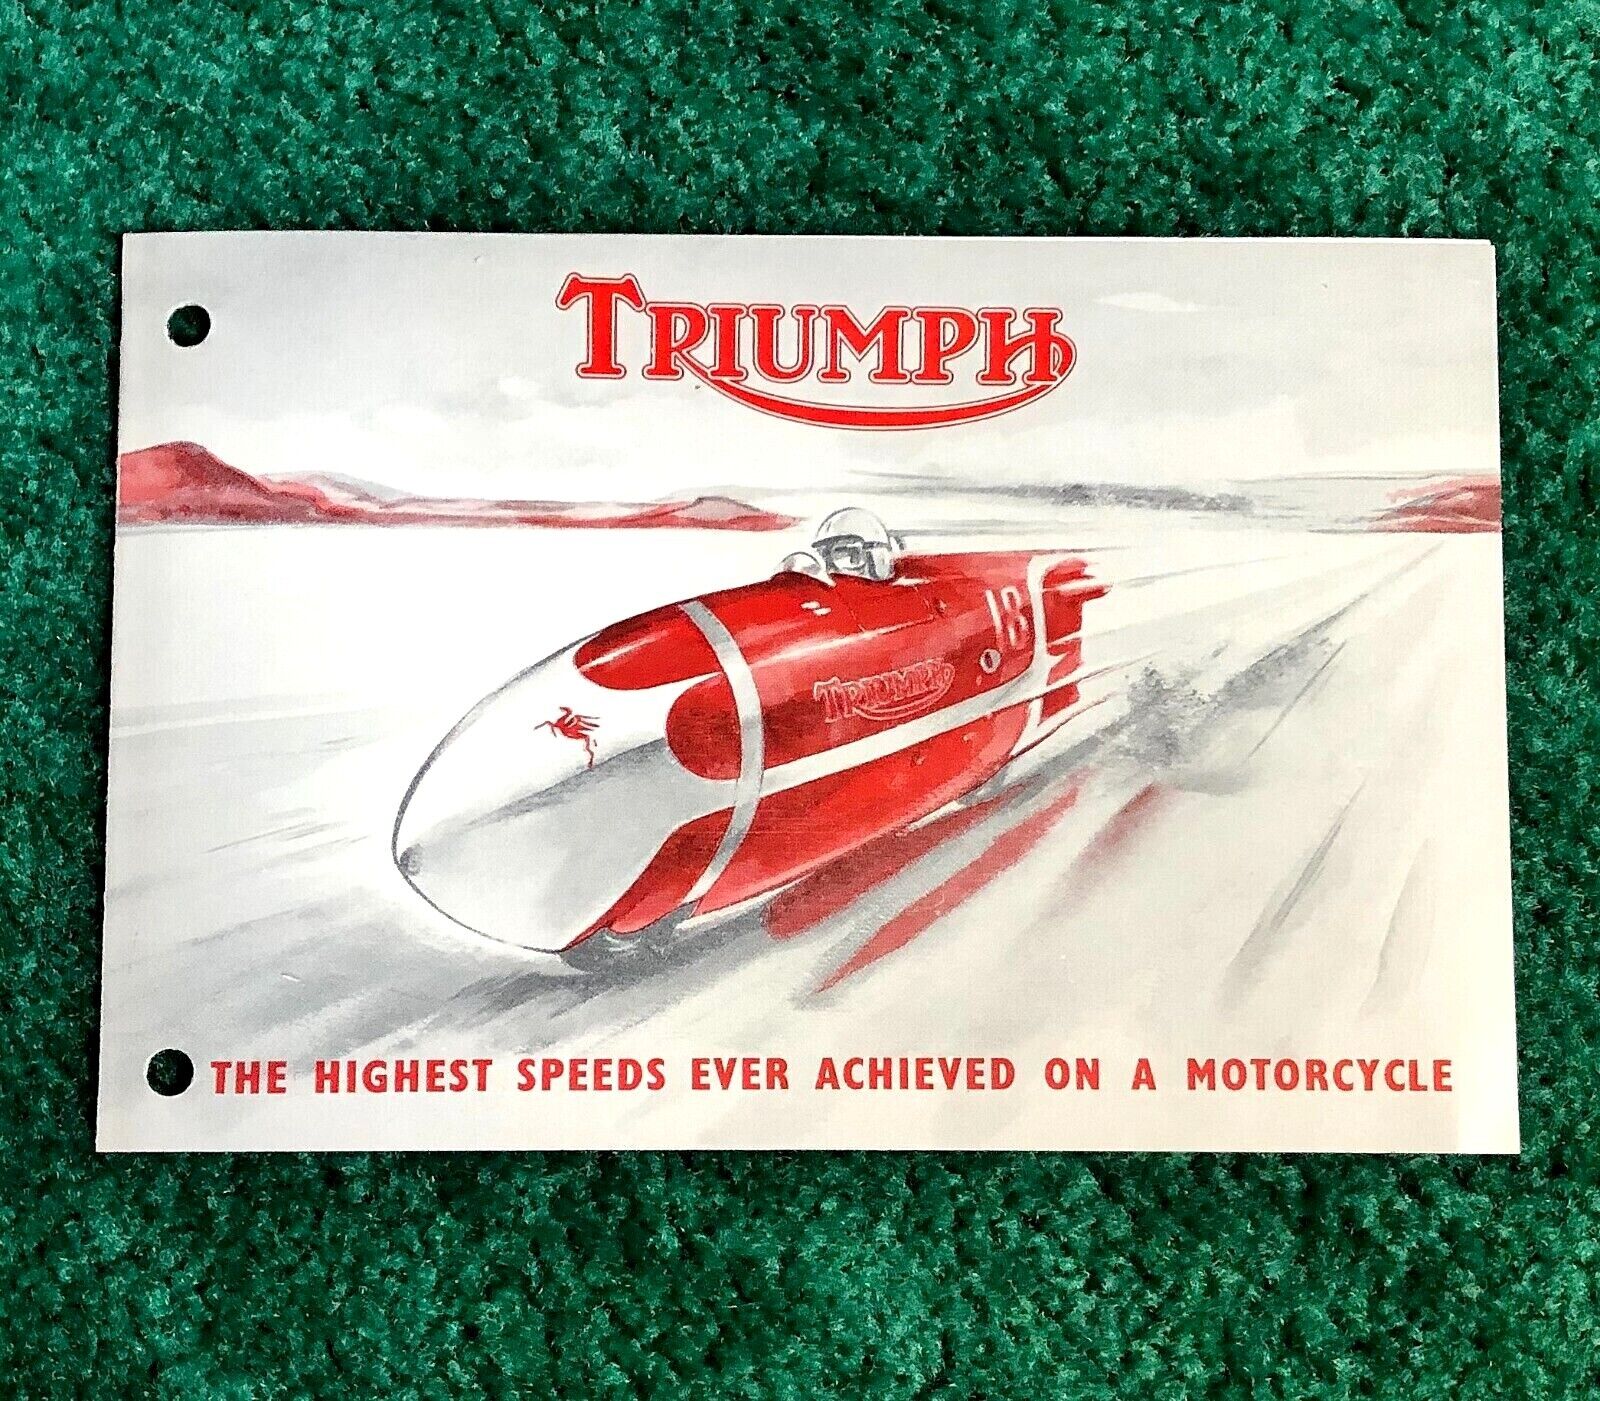 Rare Orig 1956 Triumph Motorcycle Brochure Bonneville 193 Mph Speed Record 1955